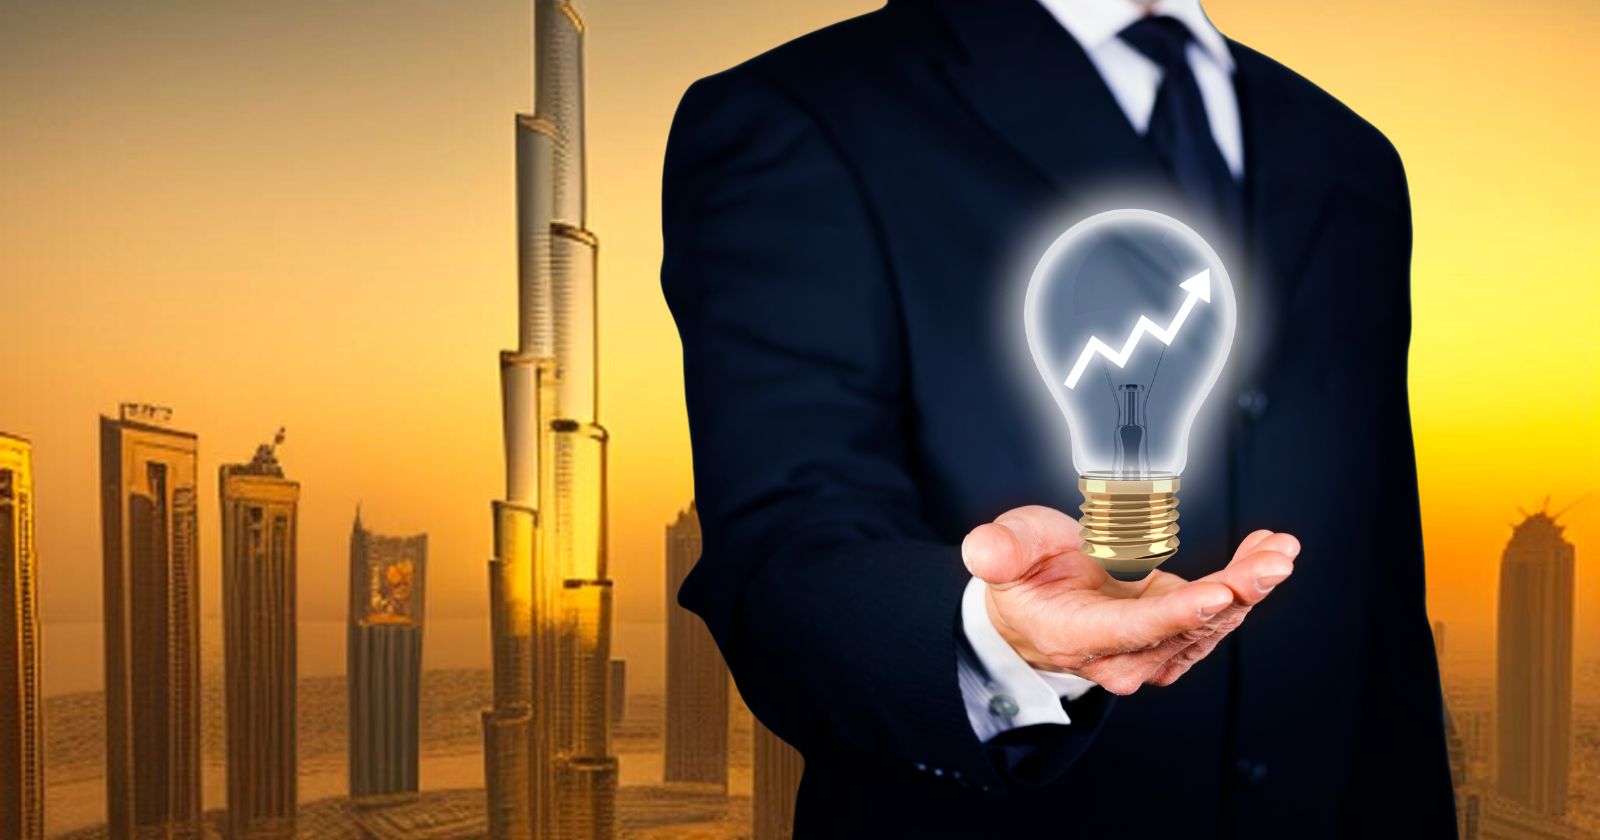 The 11 most successful business ideas in Dubai, United Arab Emirates